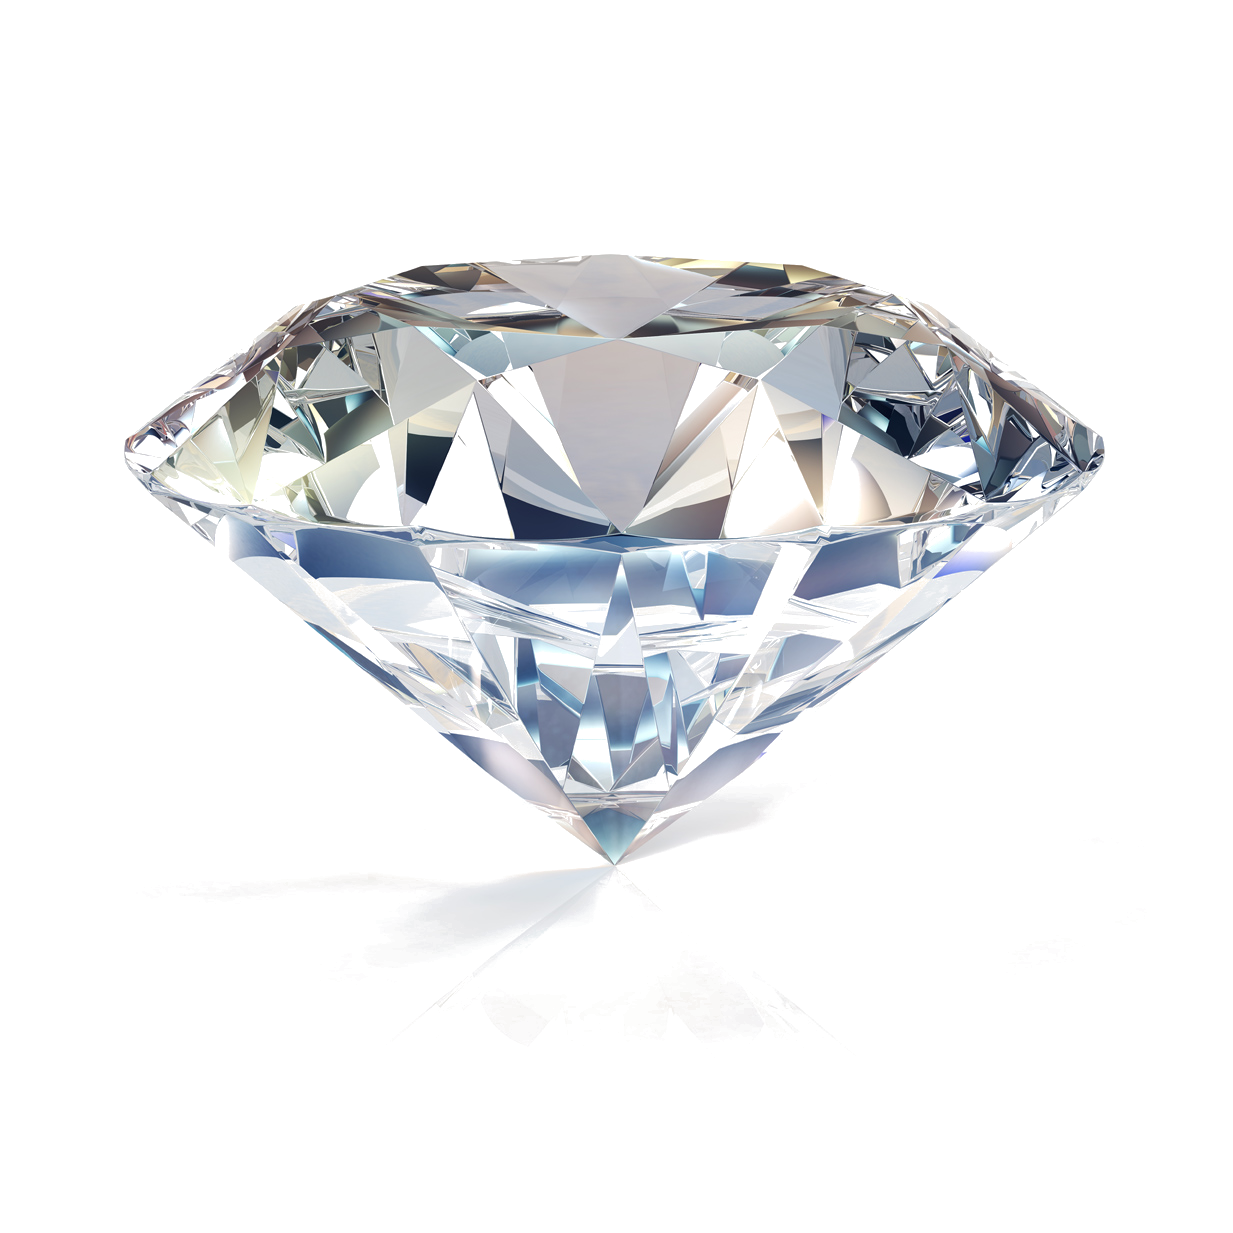 Swarovski, diamond, crystal, microcrystal, toothgem